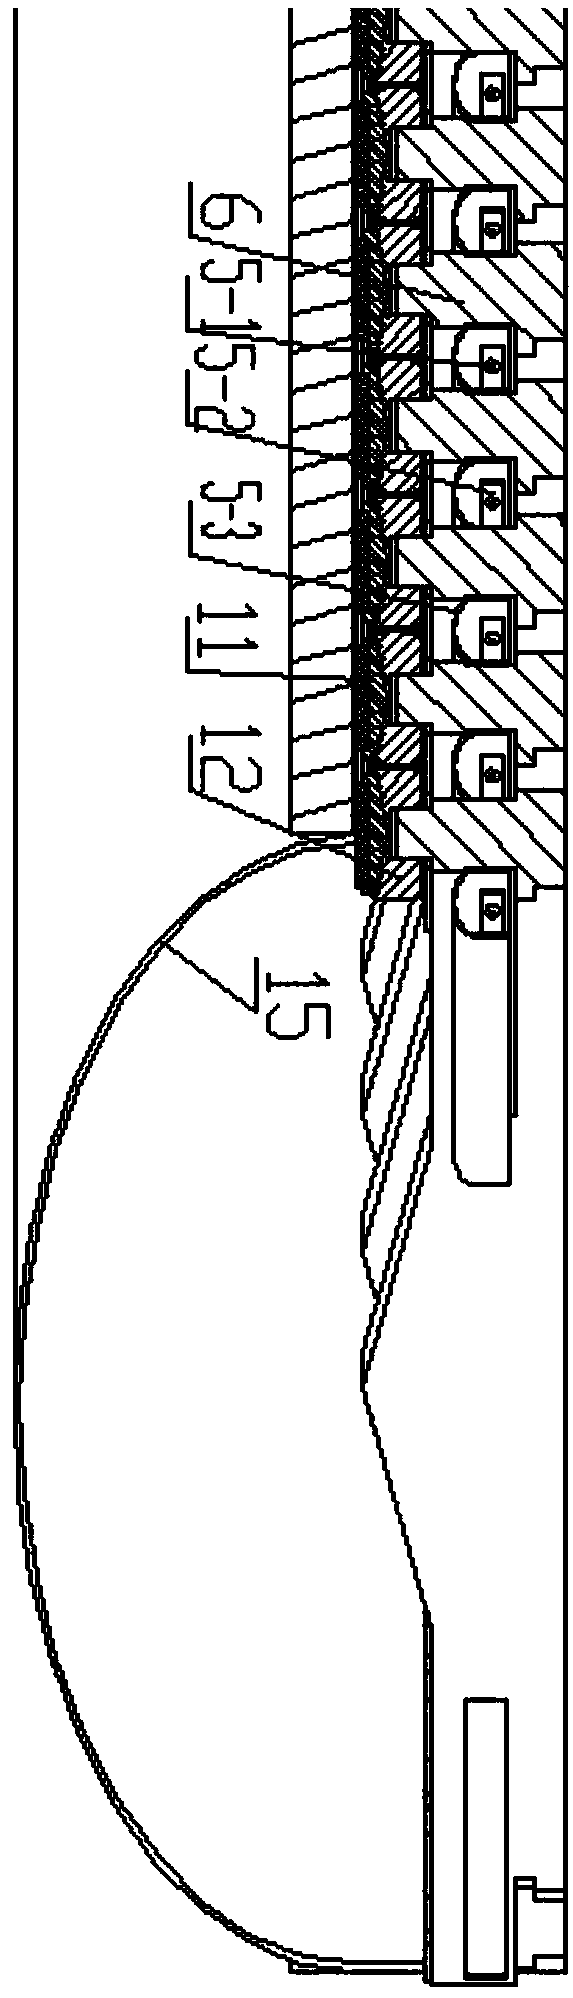 Oblique multi-directional displacement telescopic device